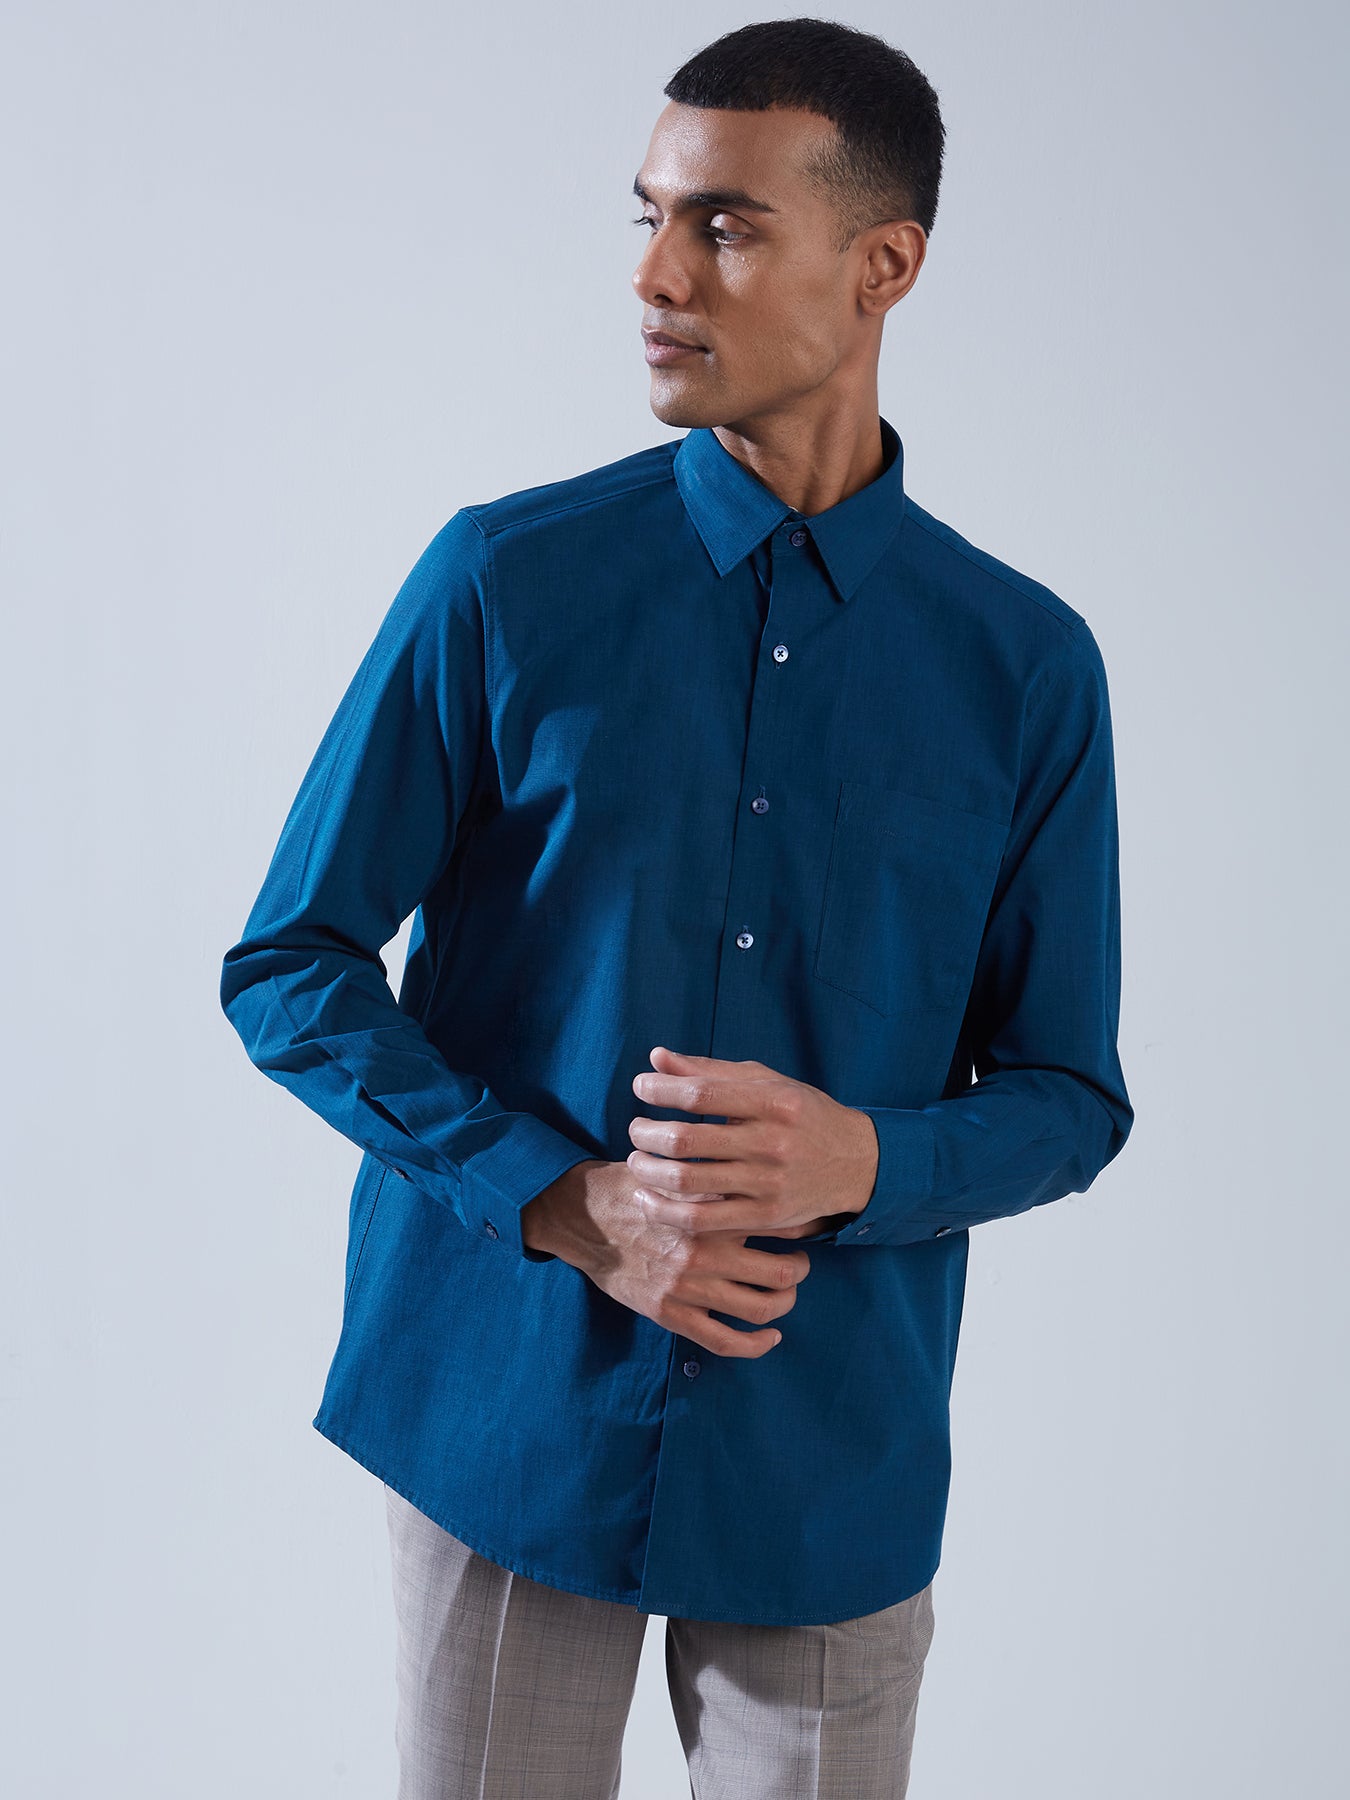 100% Cotton Teal Blue SLIM FIT Full Sleeve Formal Mens Shirts